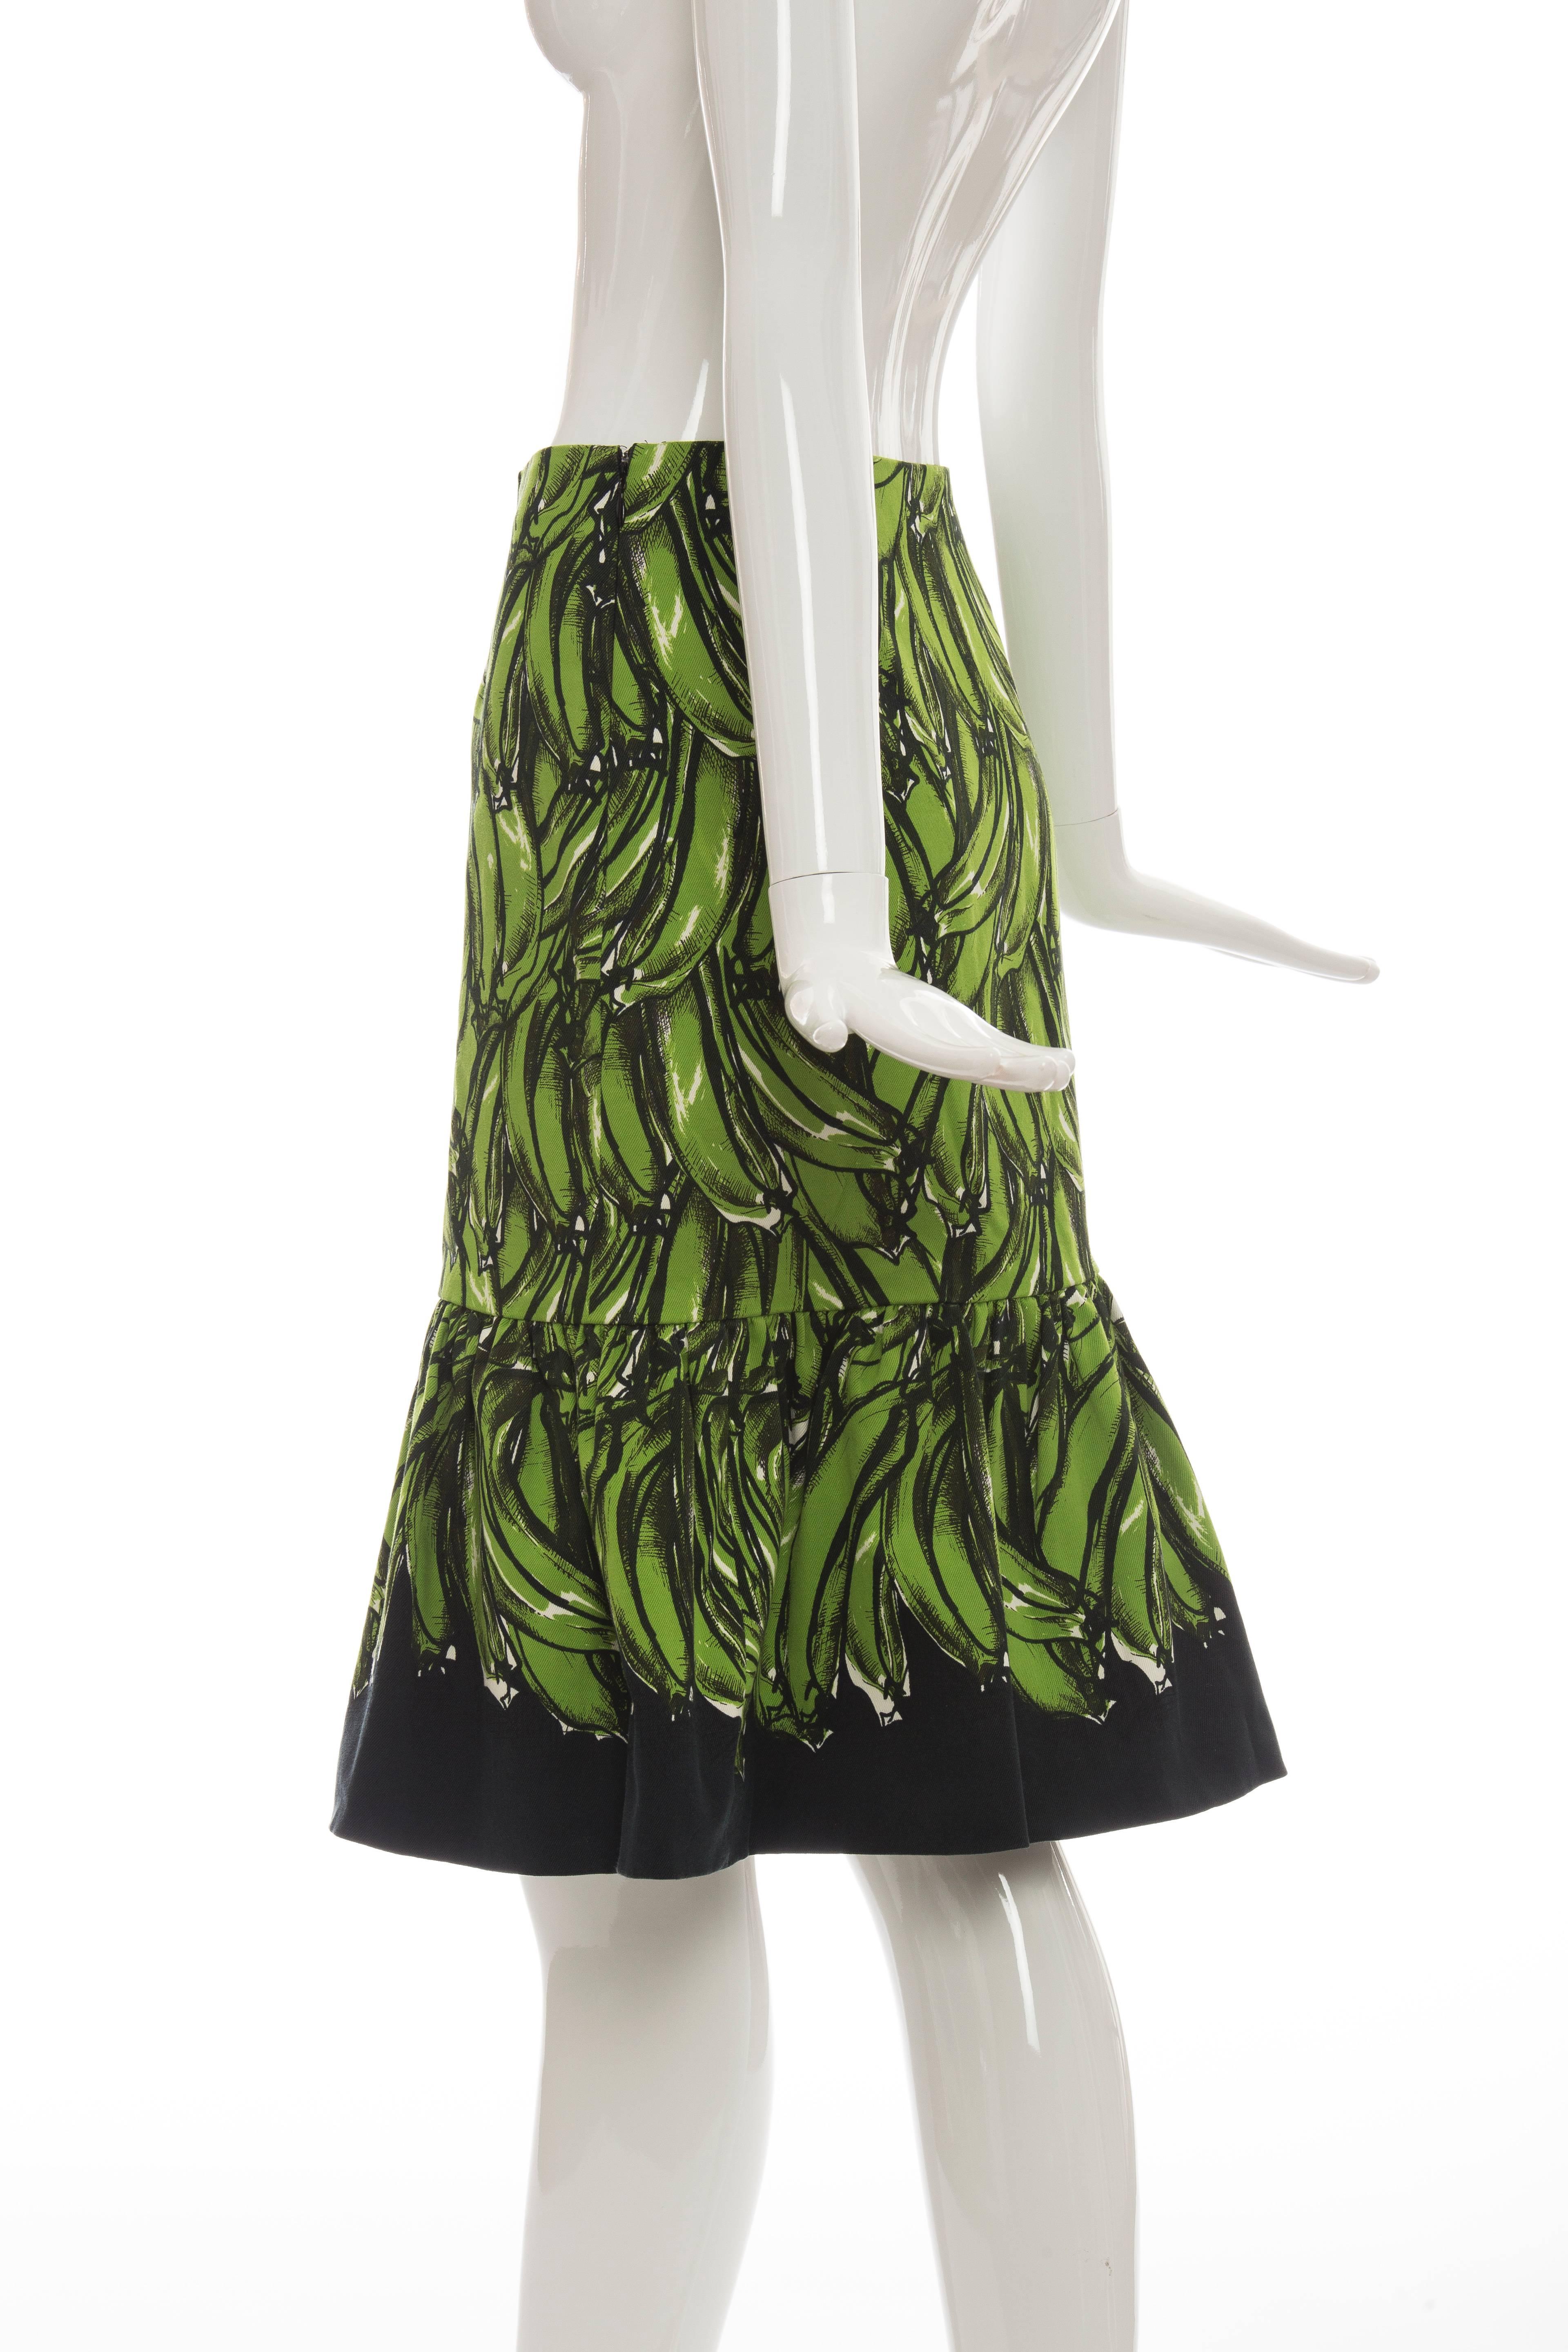 Black Prada Banana Print Skirt, Spring 2011